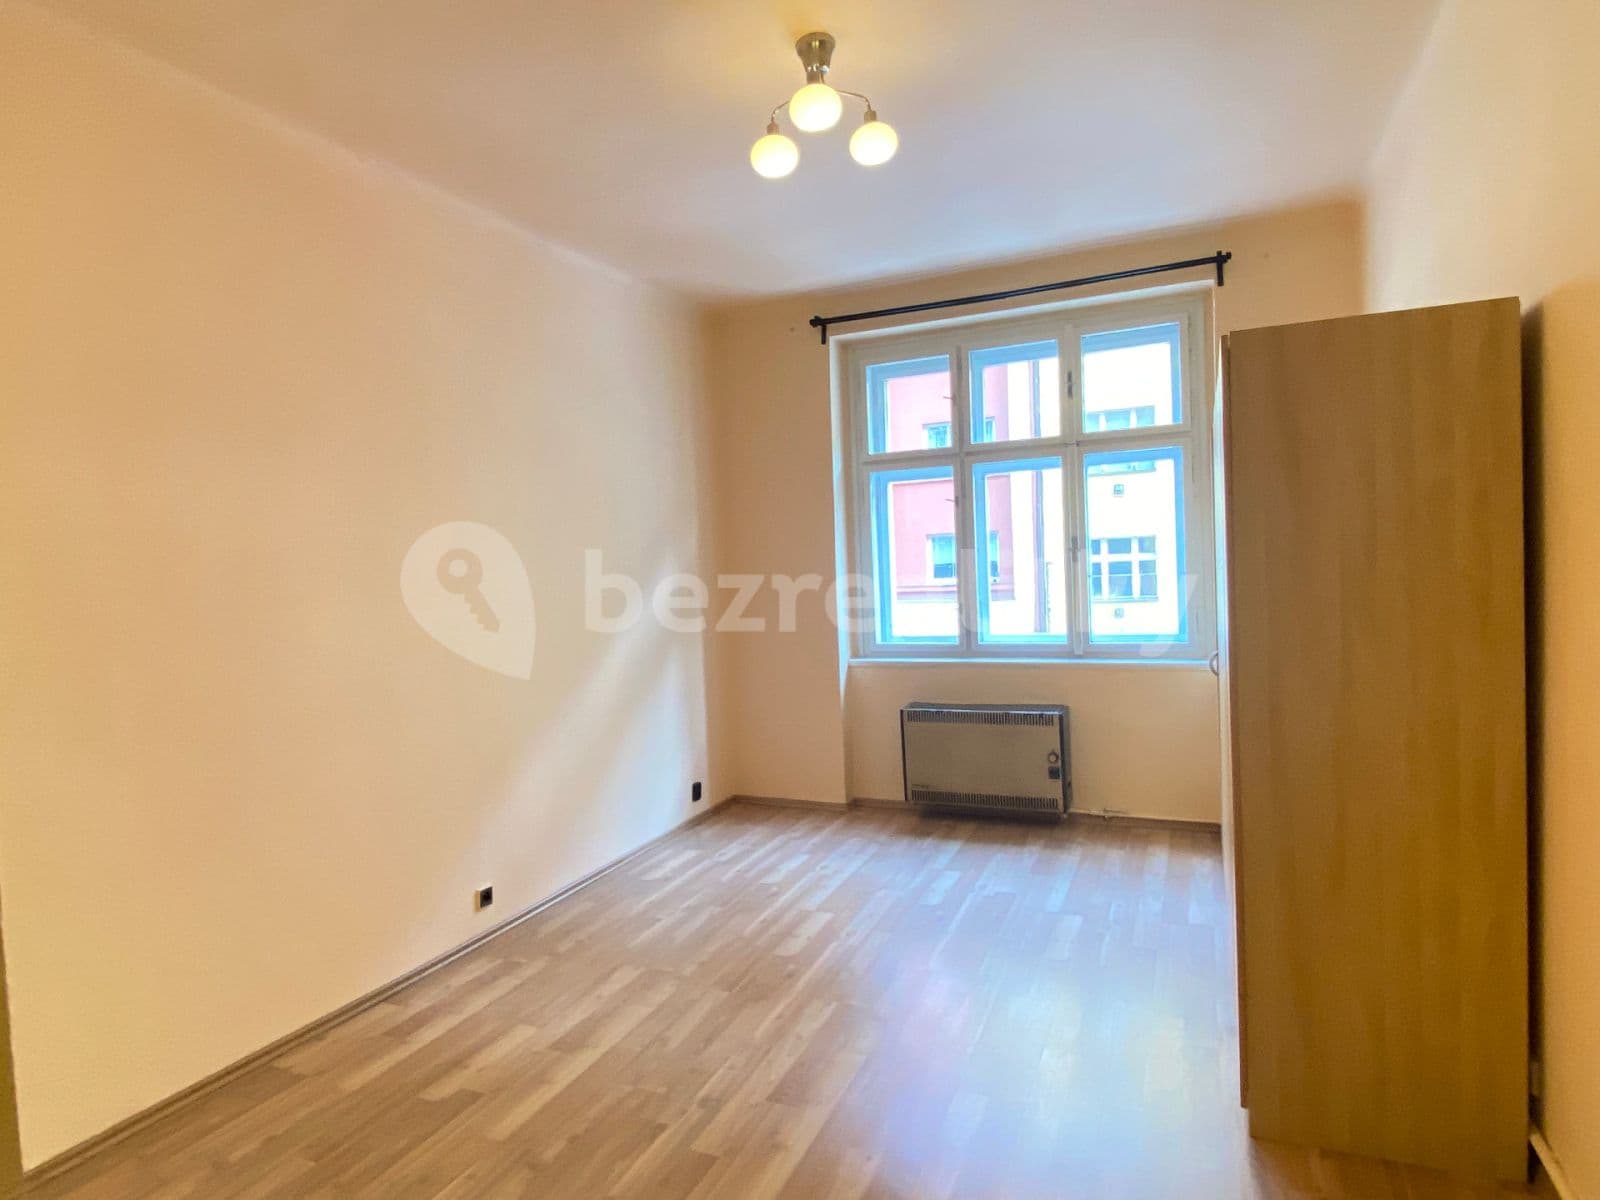 1 bedroom with open-plan kitchen flat to rent, 57 m², Biskupcova, Prague, Prague